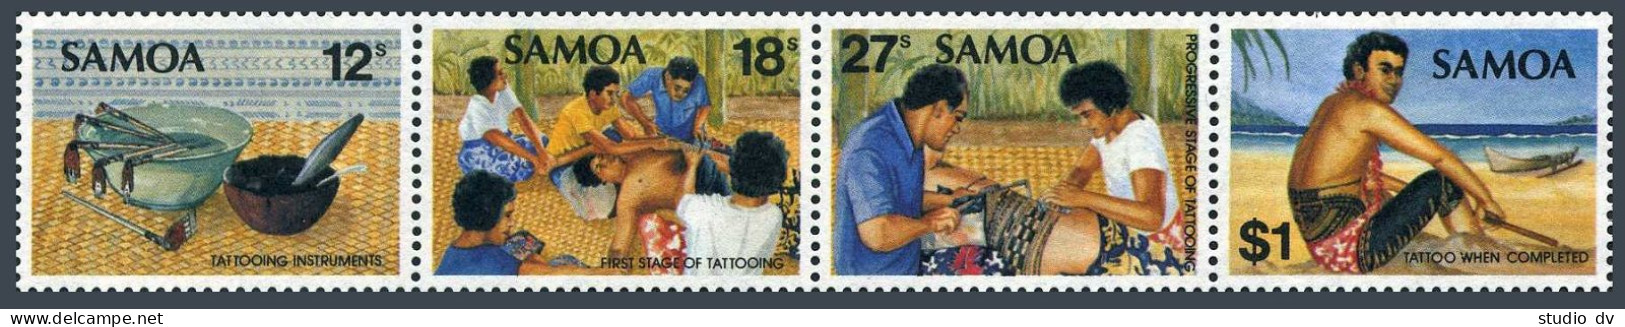 Samoa 561a Strip, MNH. Michel 464-467. Tattooing Instruments, 1981.  - Samoa